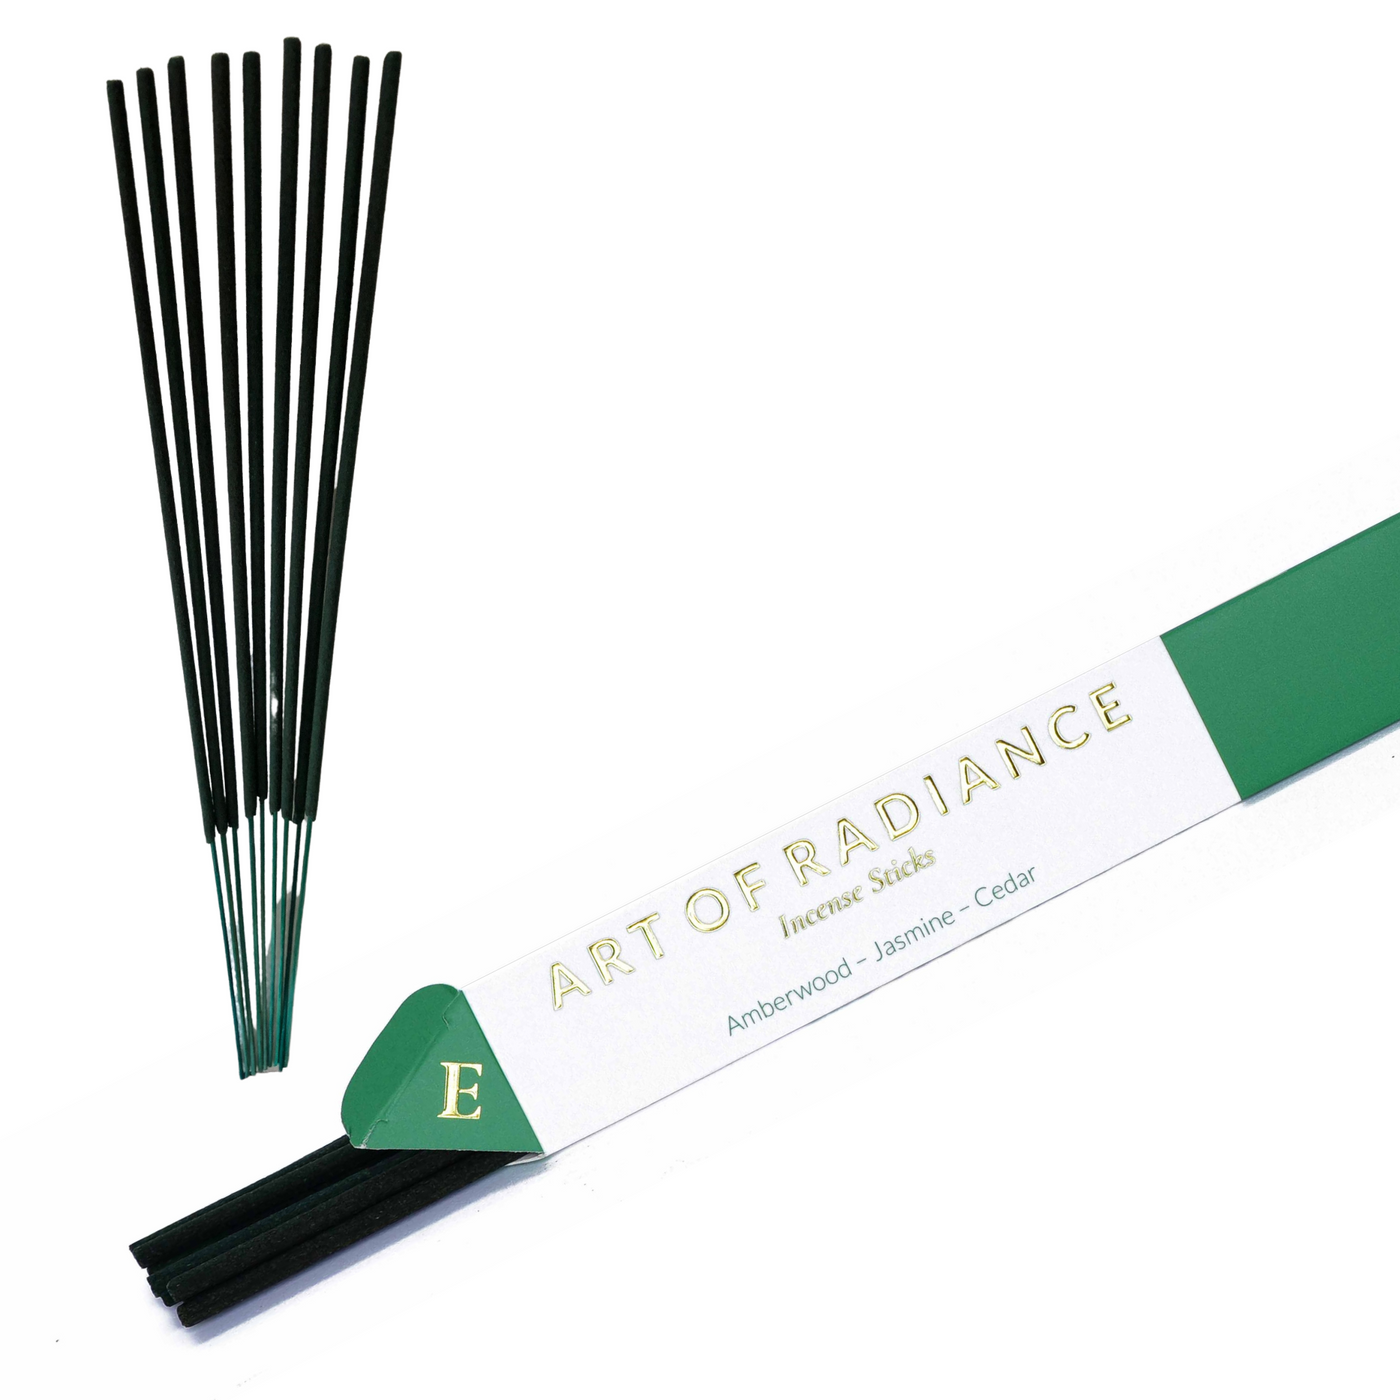 Art of Radiance Incense Sticks